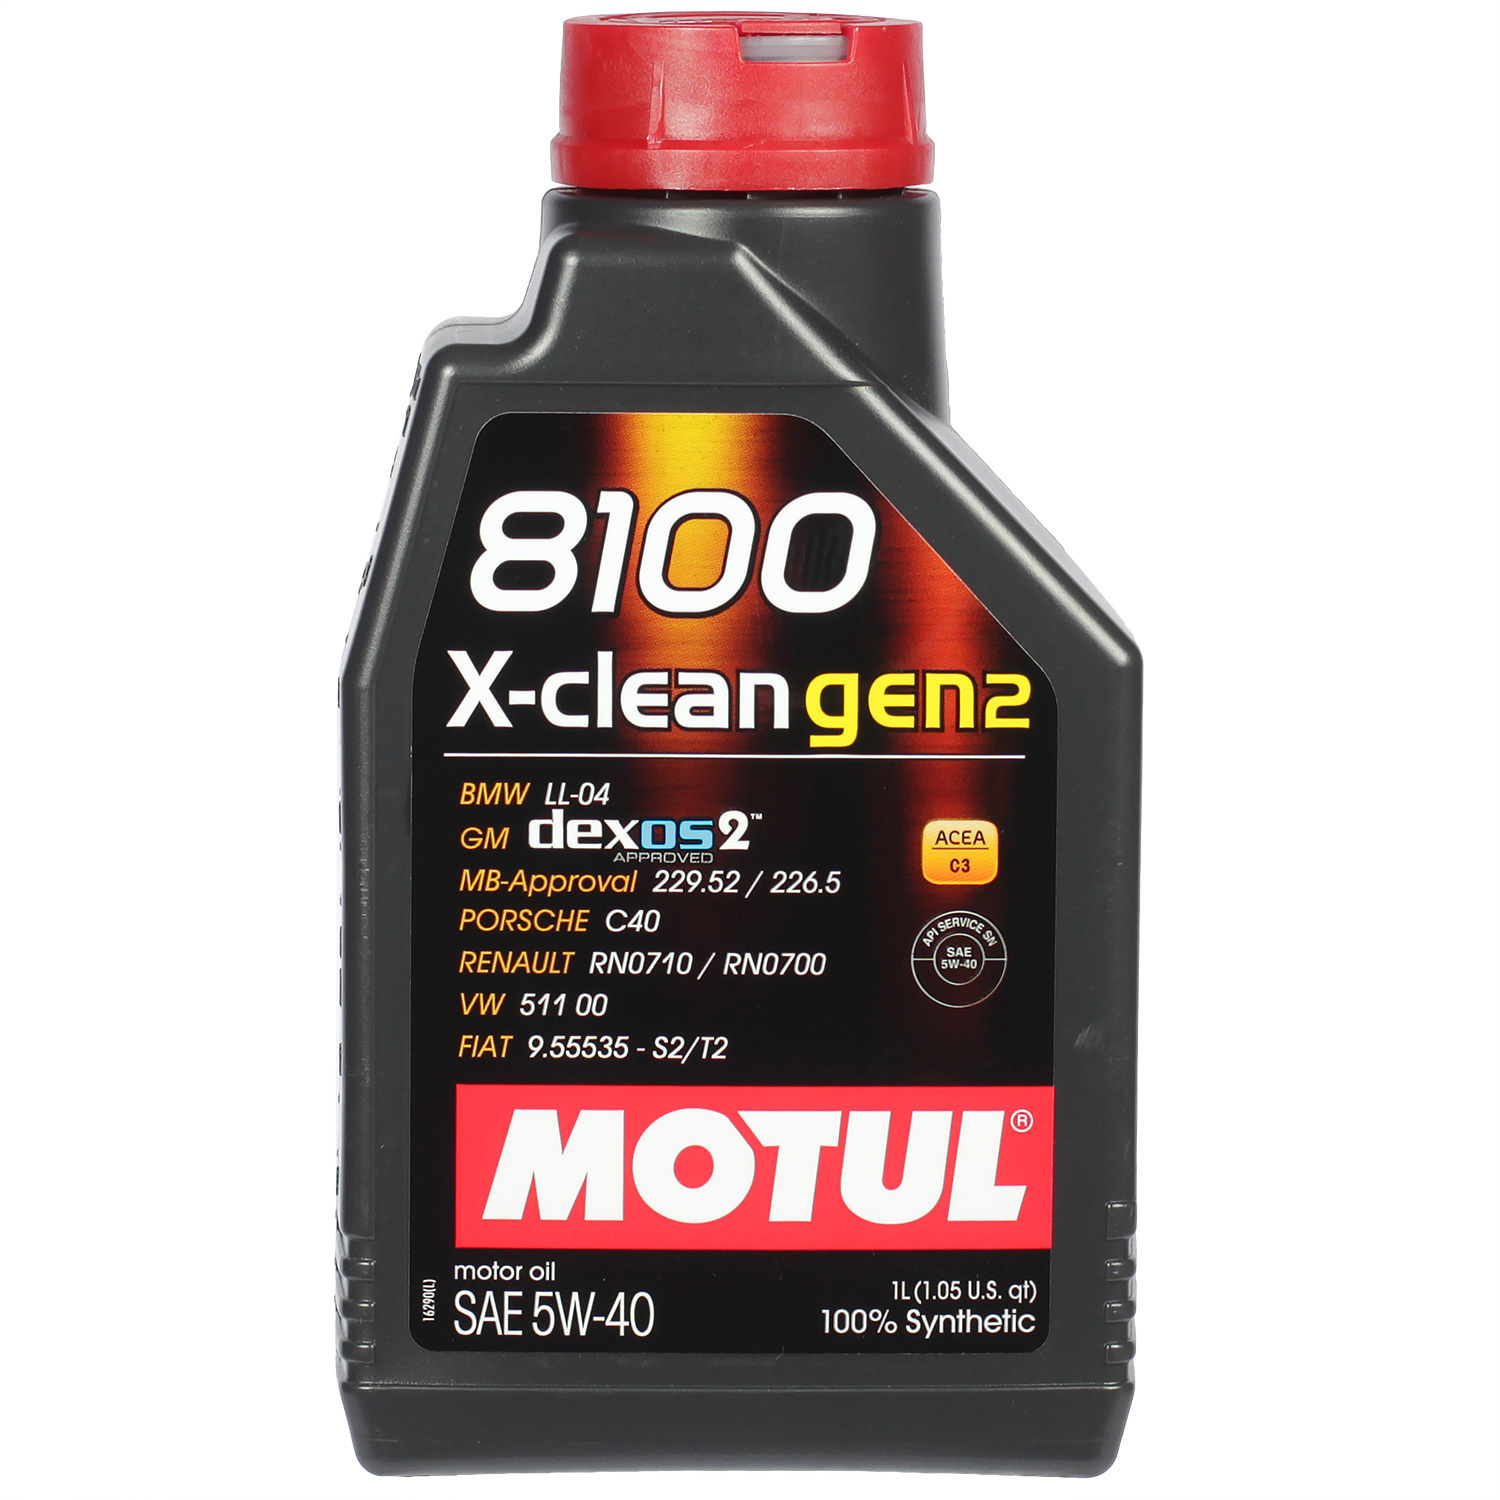 Motul Моторное масло Motul 8100 X-clean gen2 5W-40, 1 л motul моторное масло motul 8100 x clean gen2 5w 40 5 л